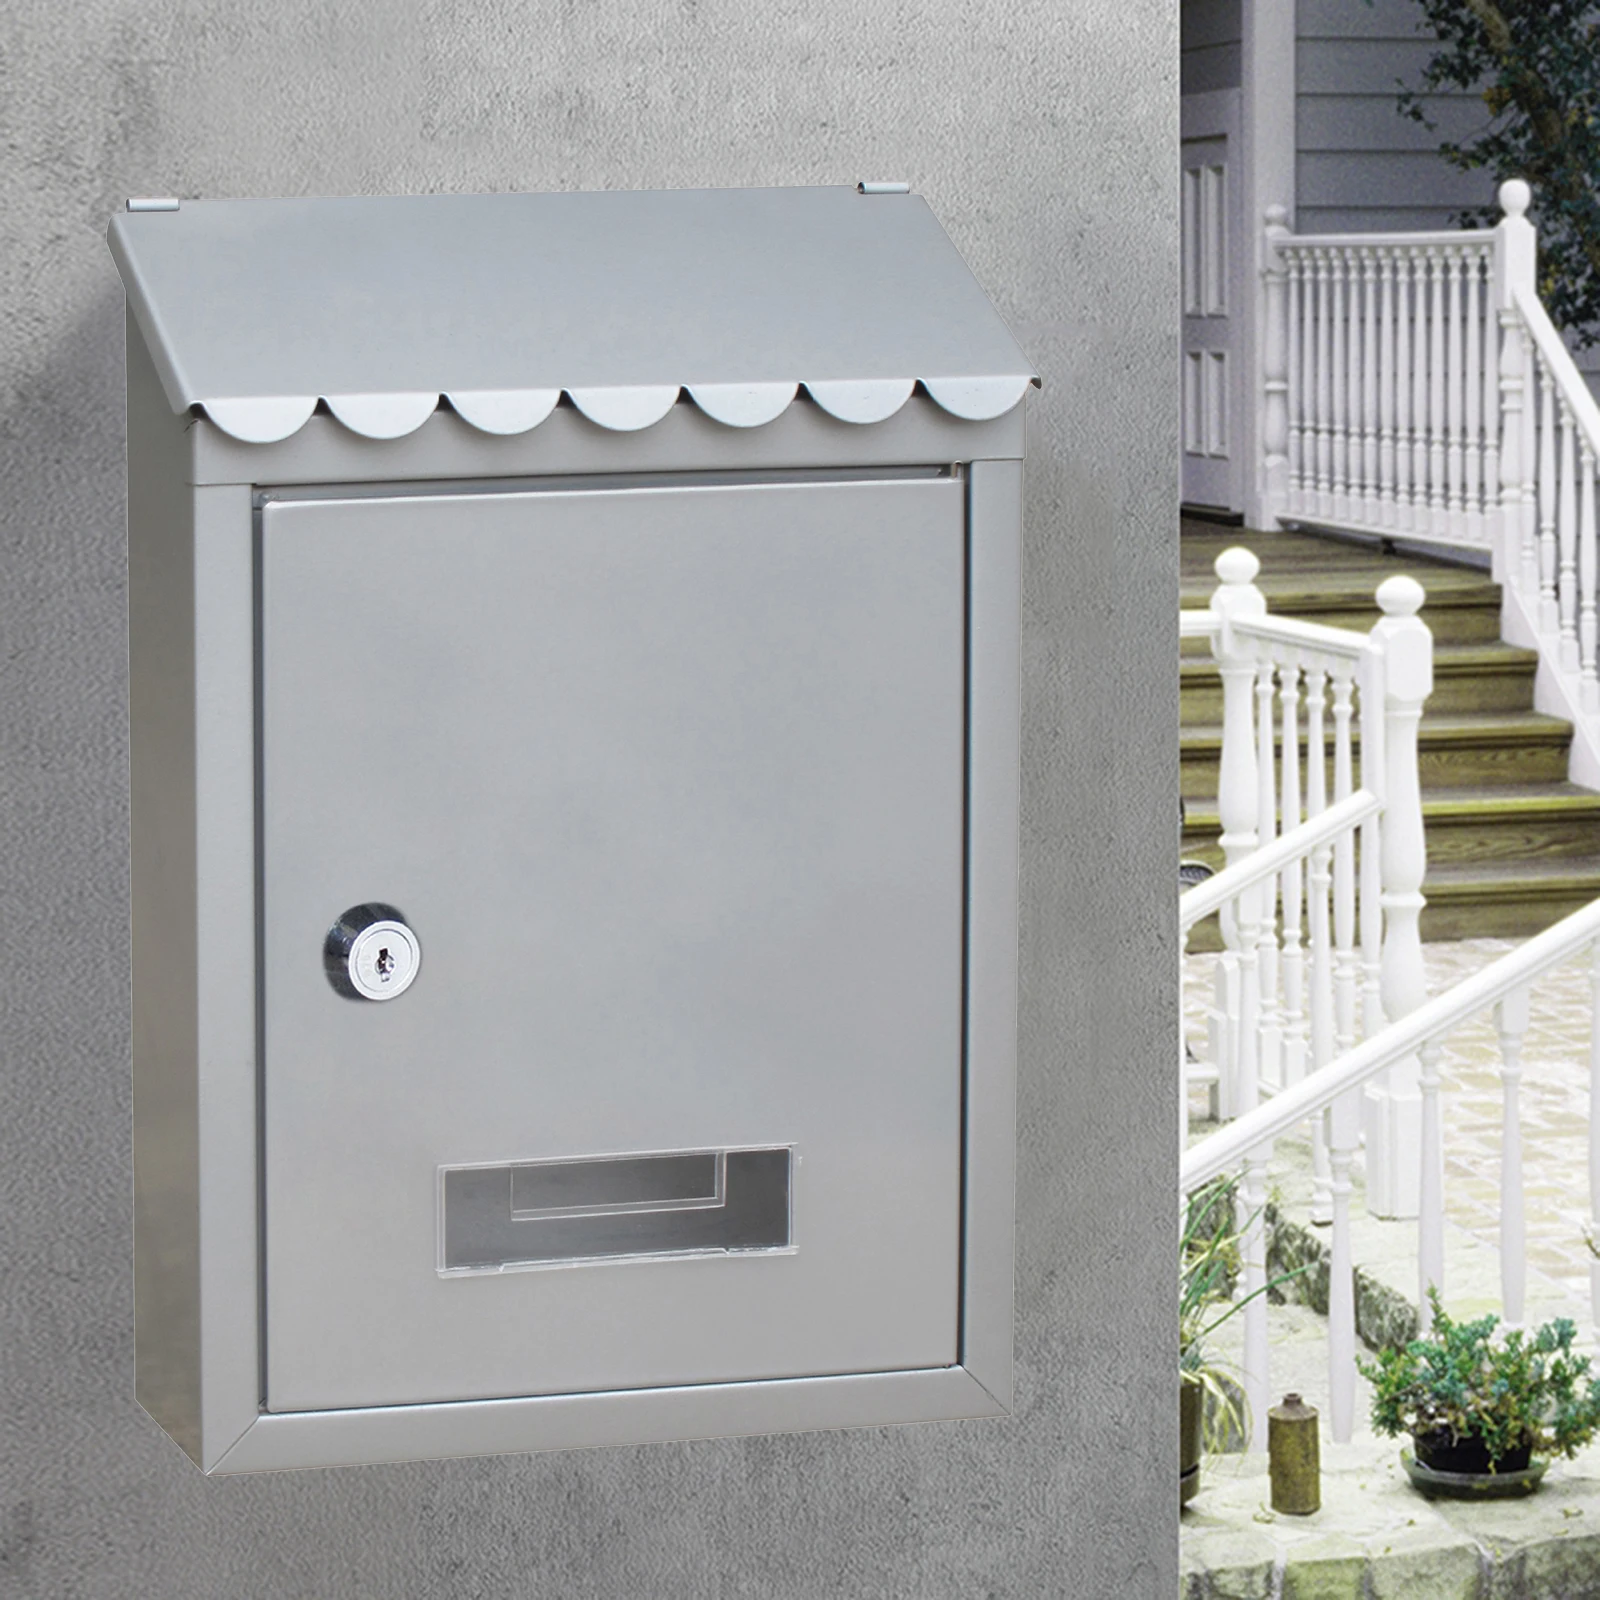 Rust-proof Mailbox Wall Mount Post Lockable Mail Box Office Drop Box Case